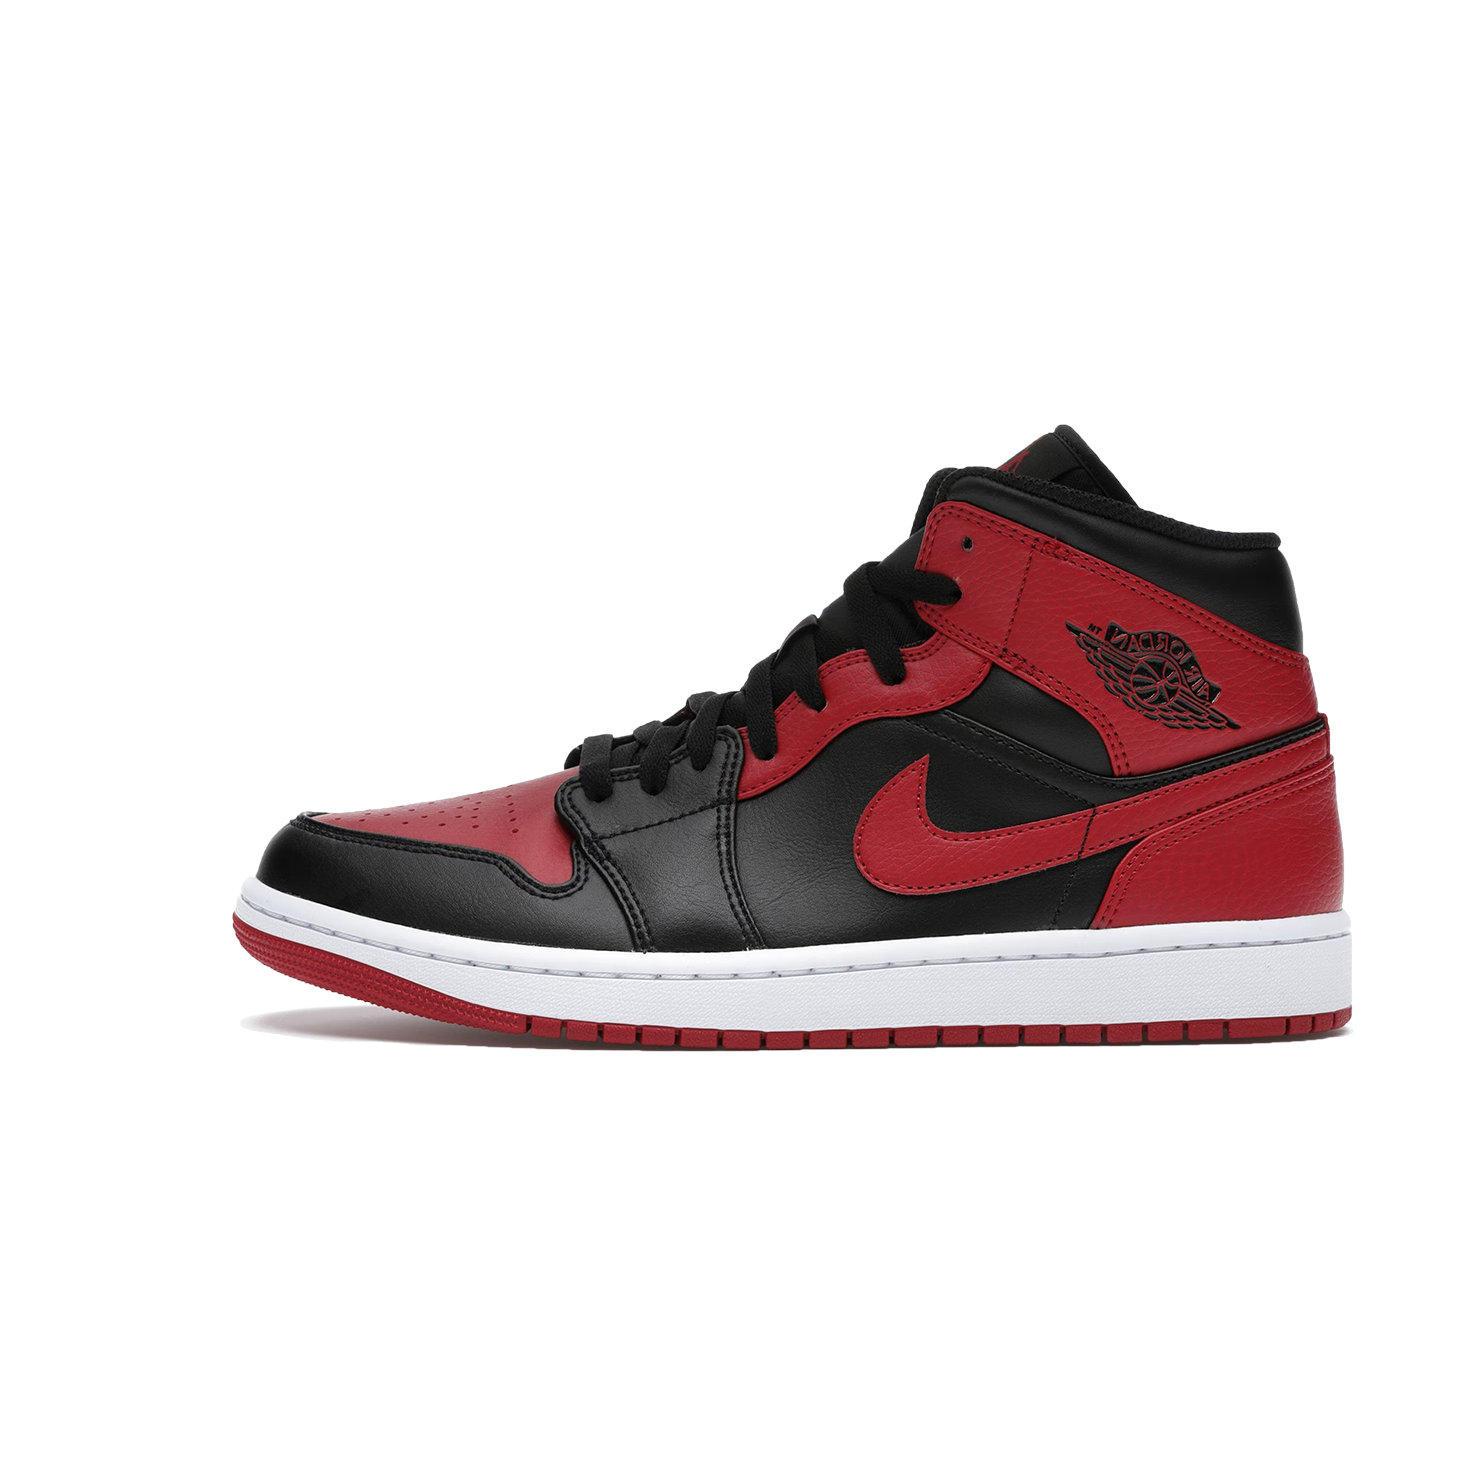 Jordan 1 Mid Banned (2020) - www.flamsneaker.com